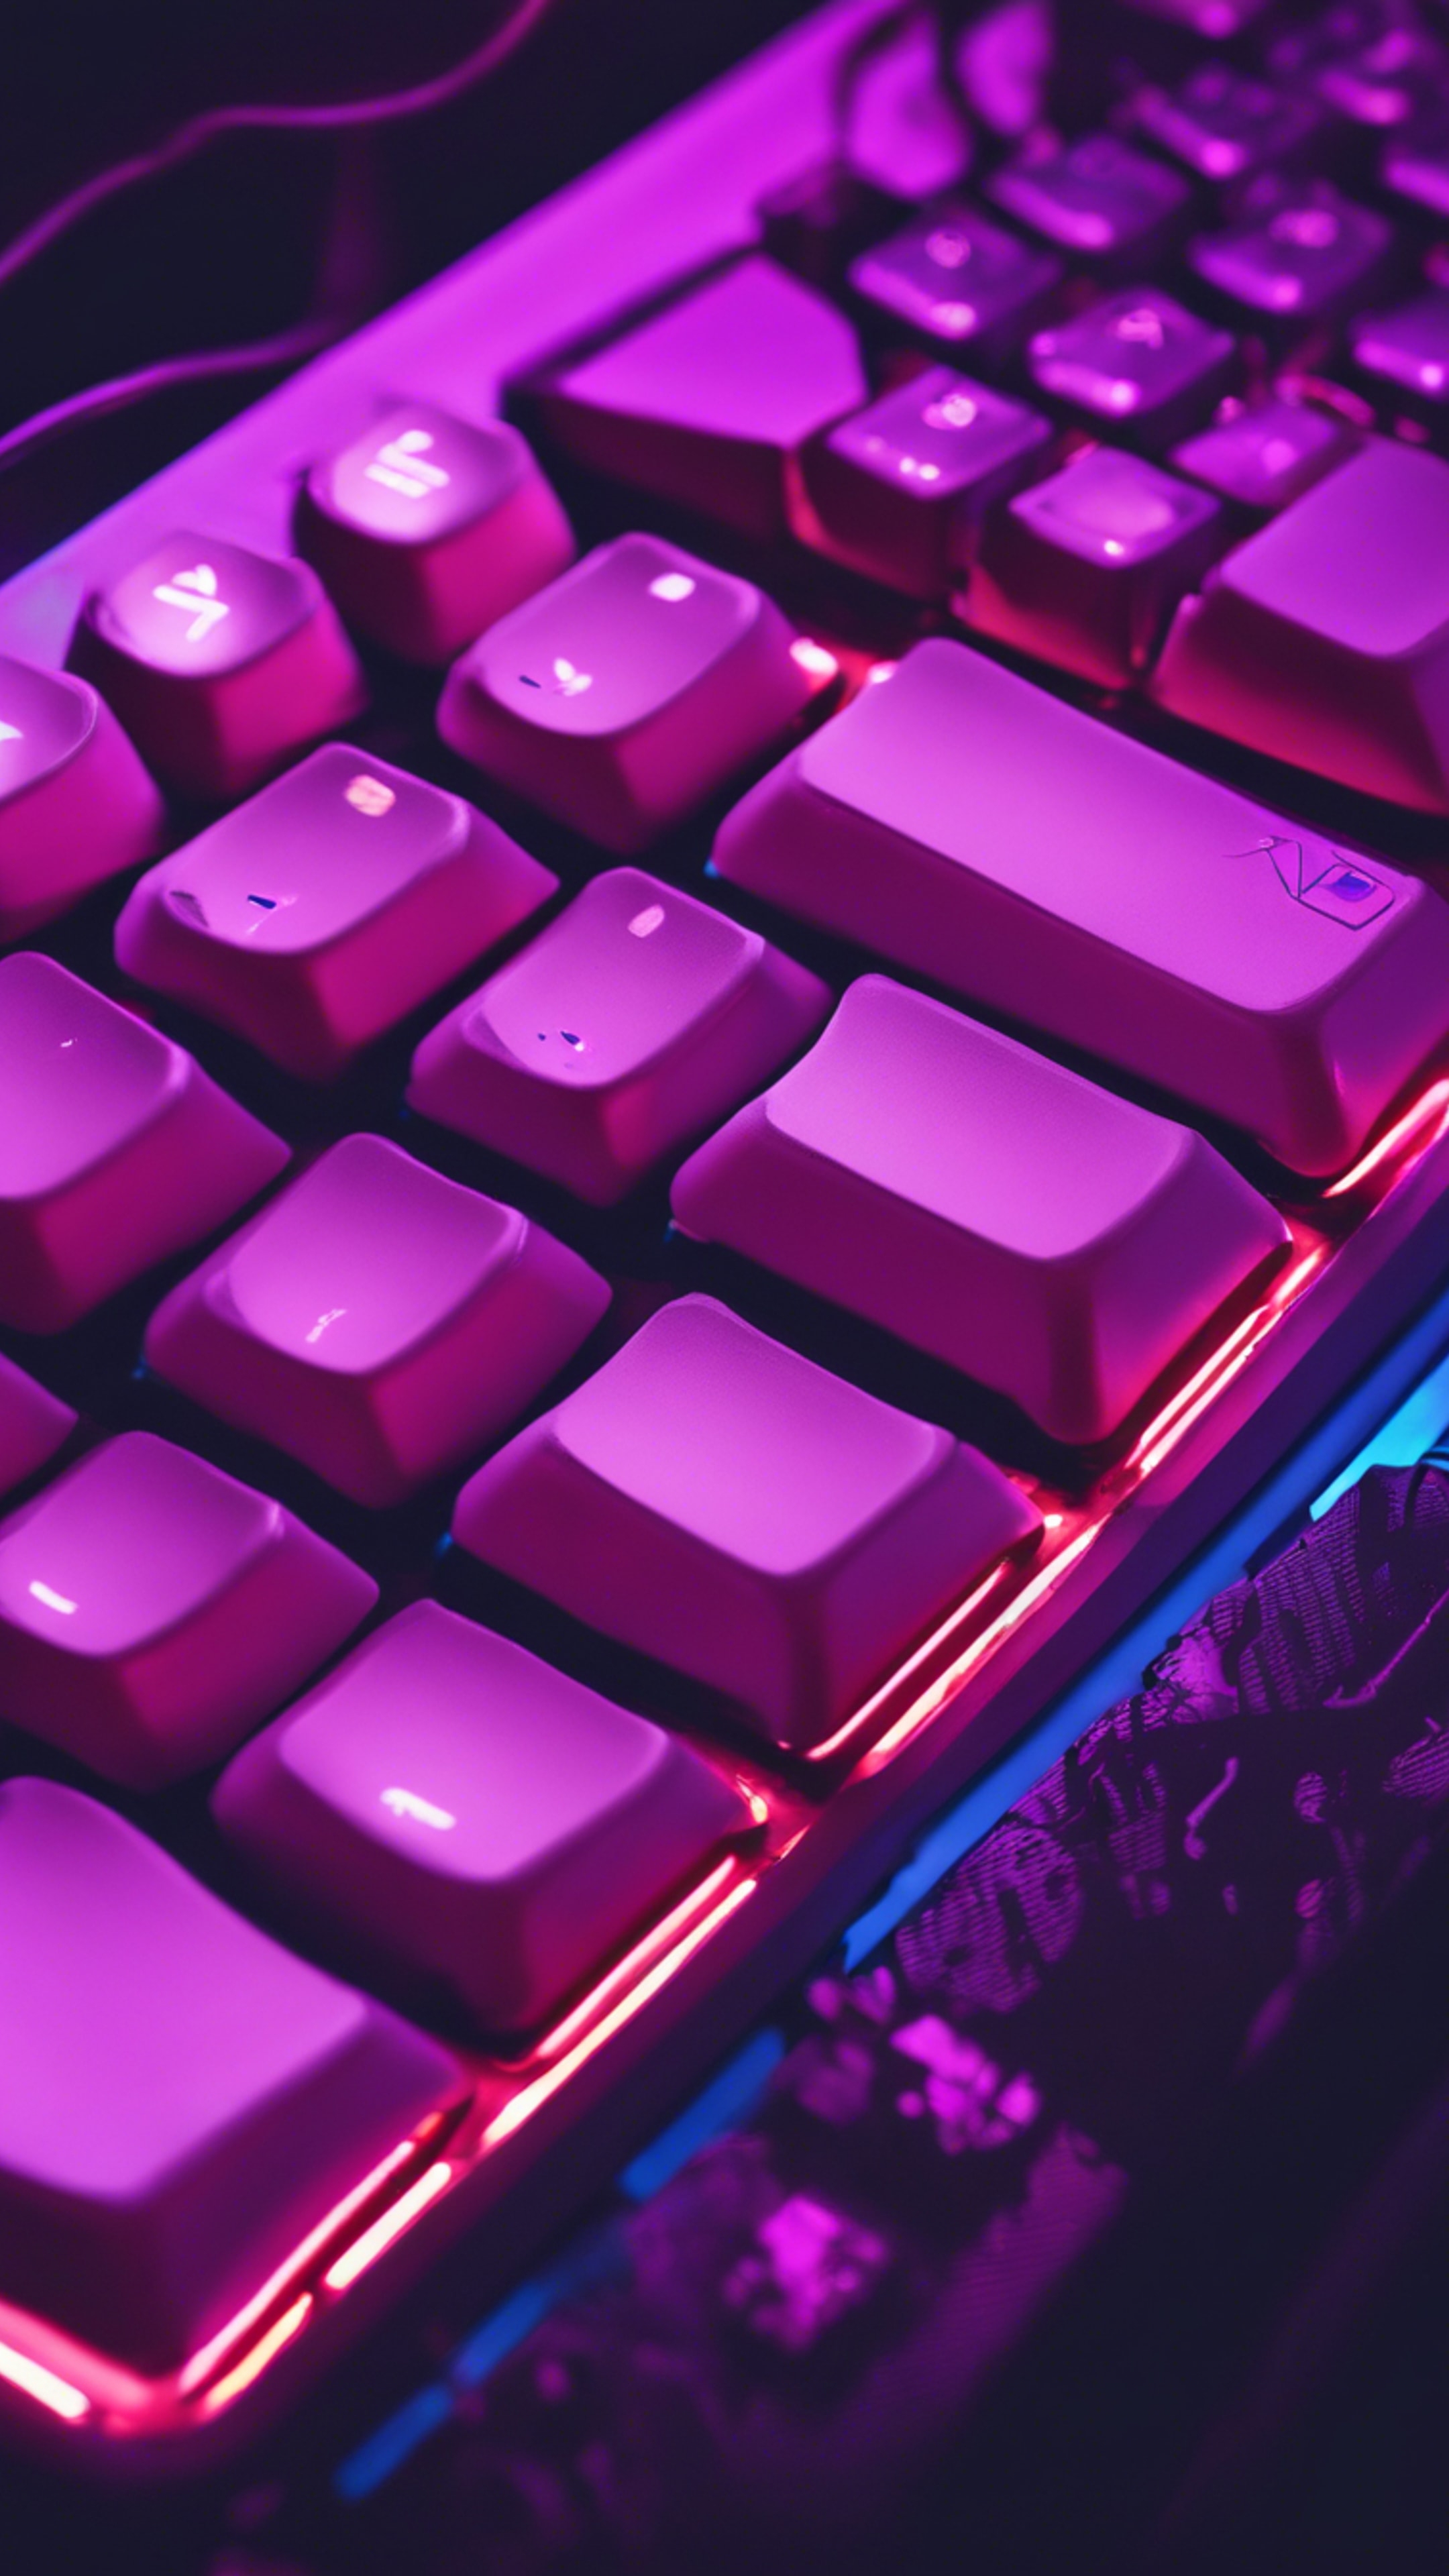 A detailed close-up image of a neon purple backlit gaming keyboard in a dark room. duvar kağıdı[fb3f2373aec546b8b630]